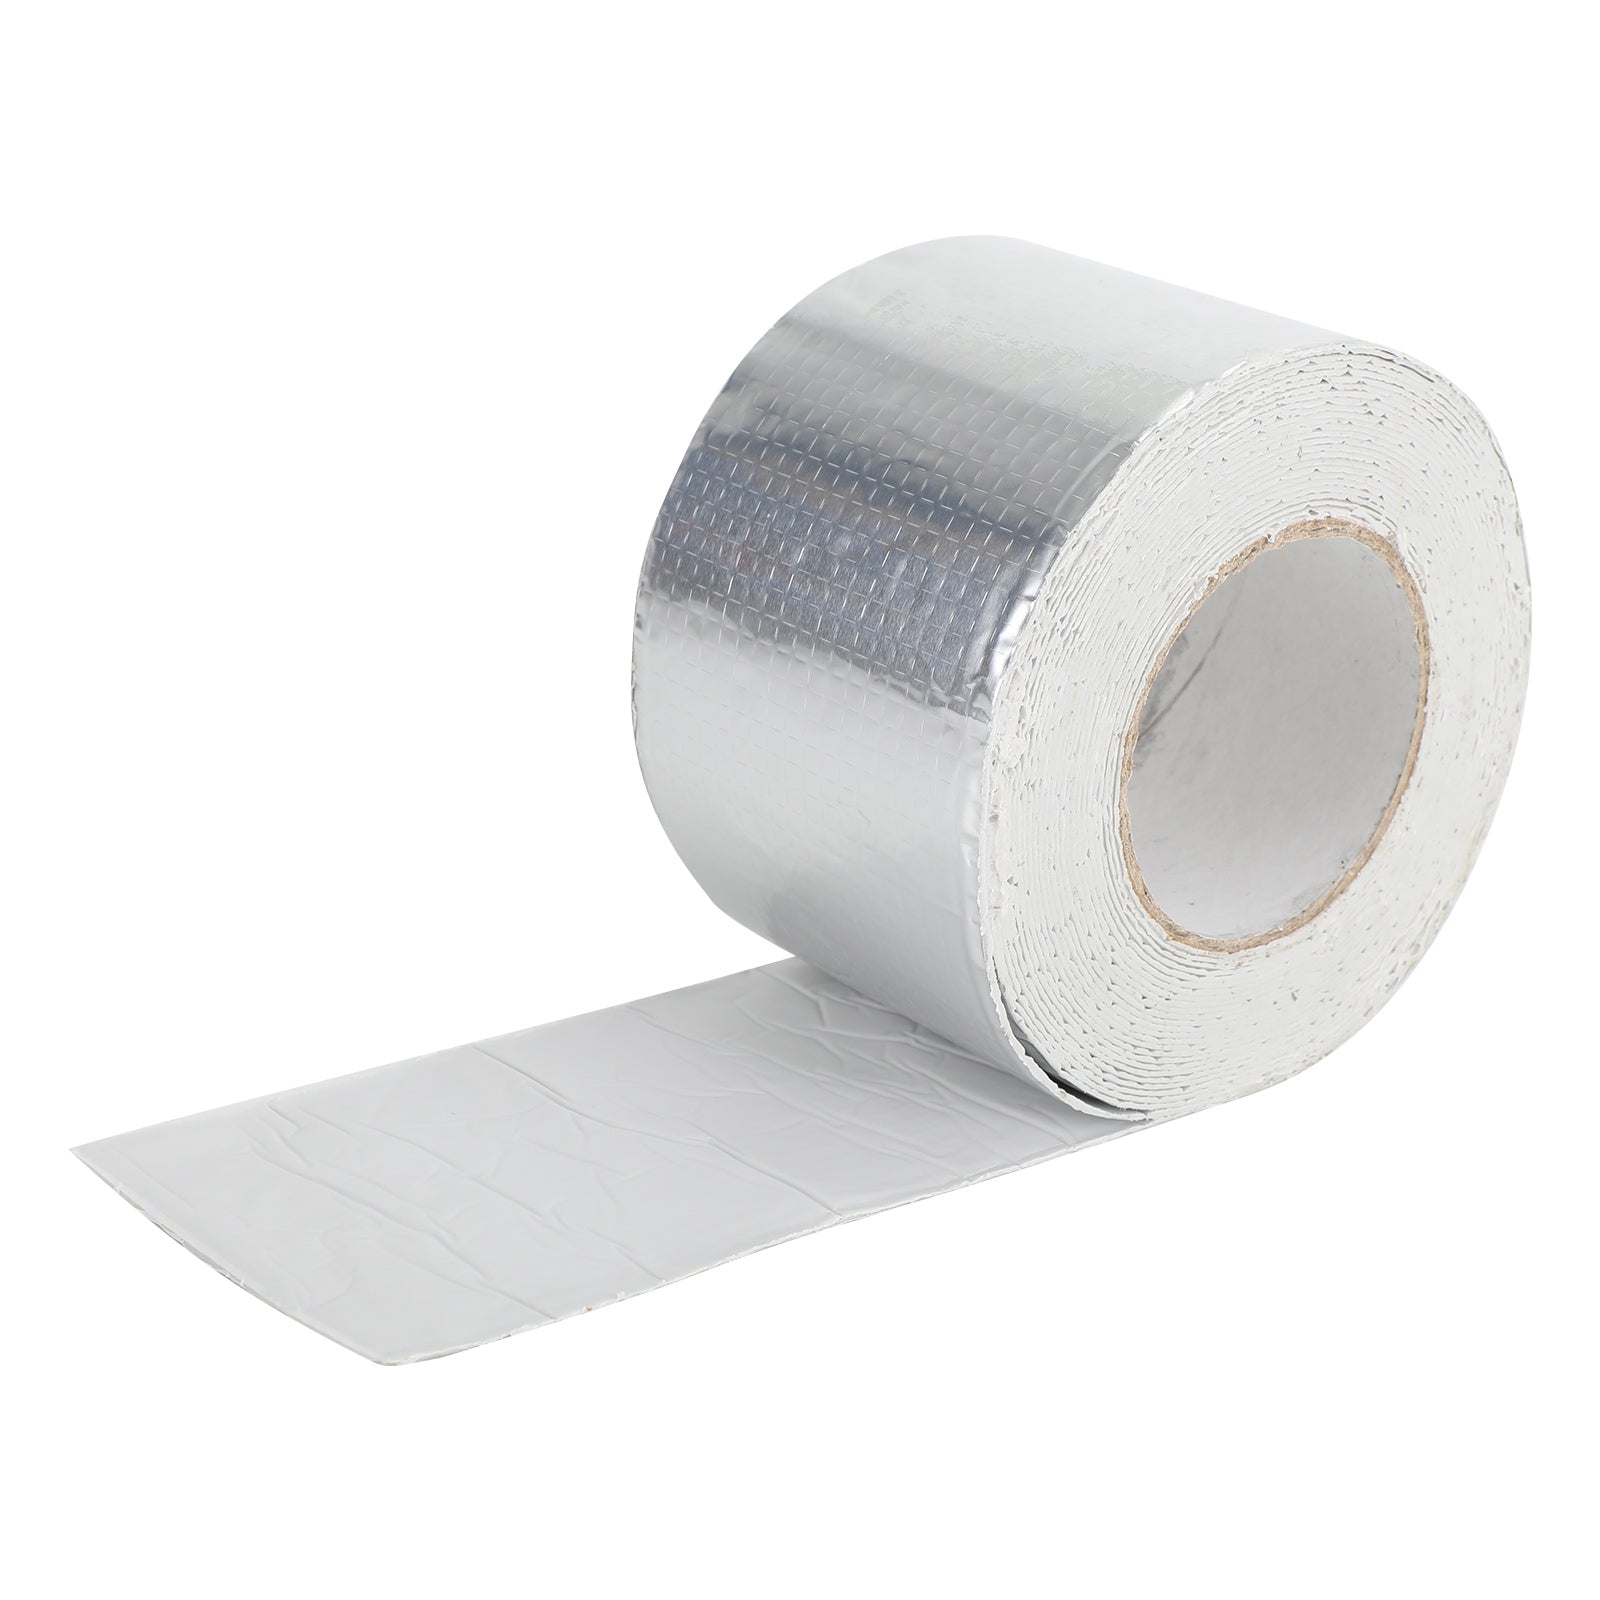 4" x 30' RV Sealant Tape Silver UV Waterproof Roof Leaks Repair Tape Seal Sticky